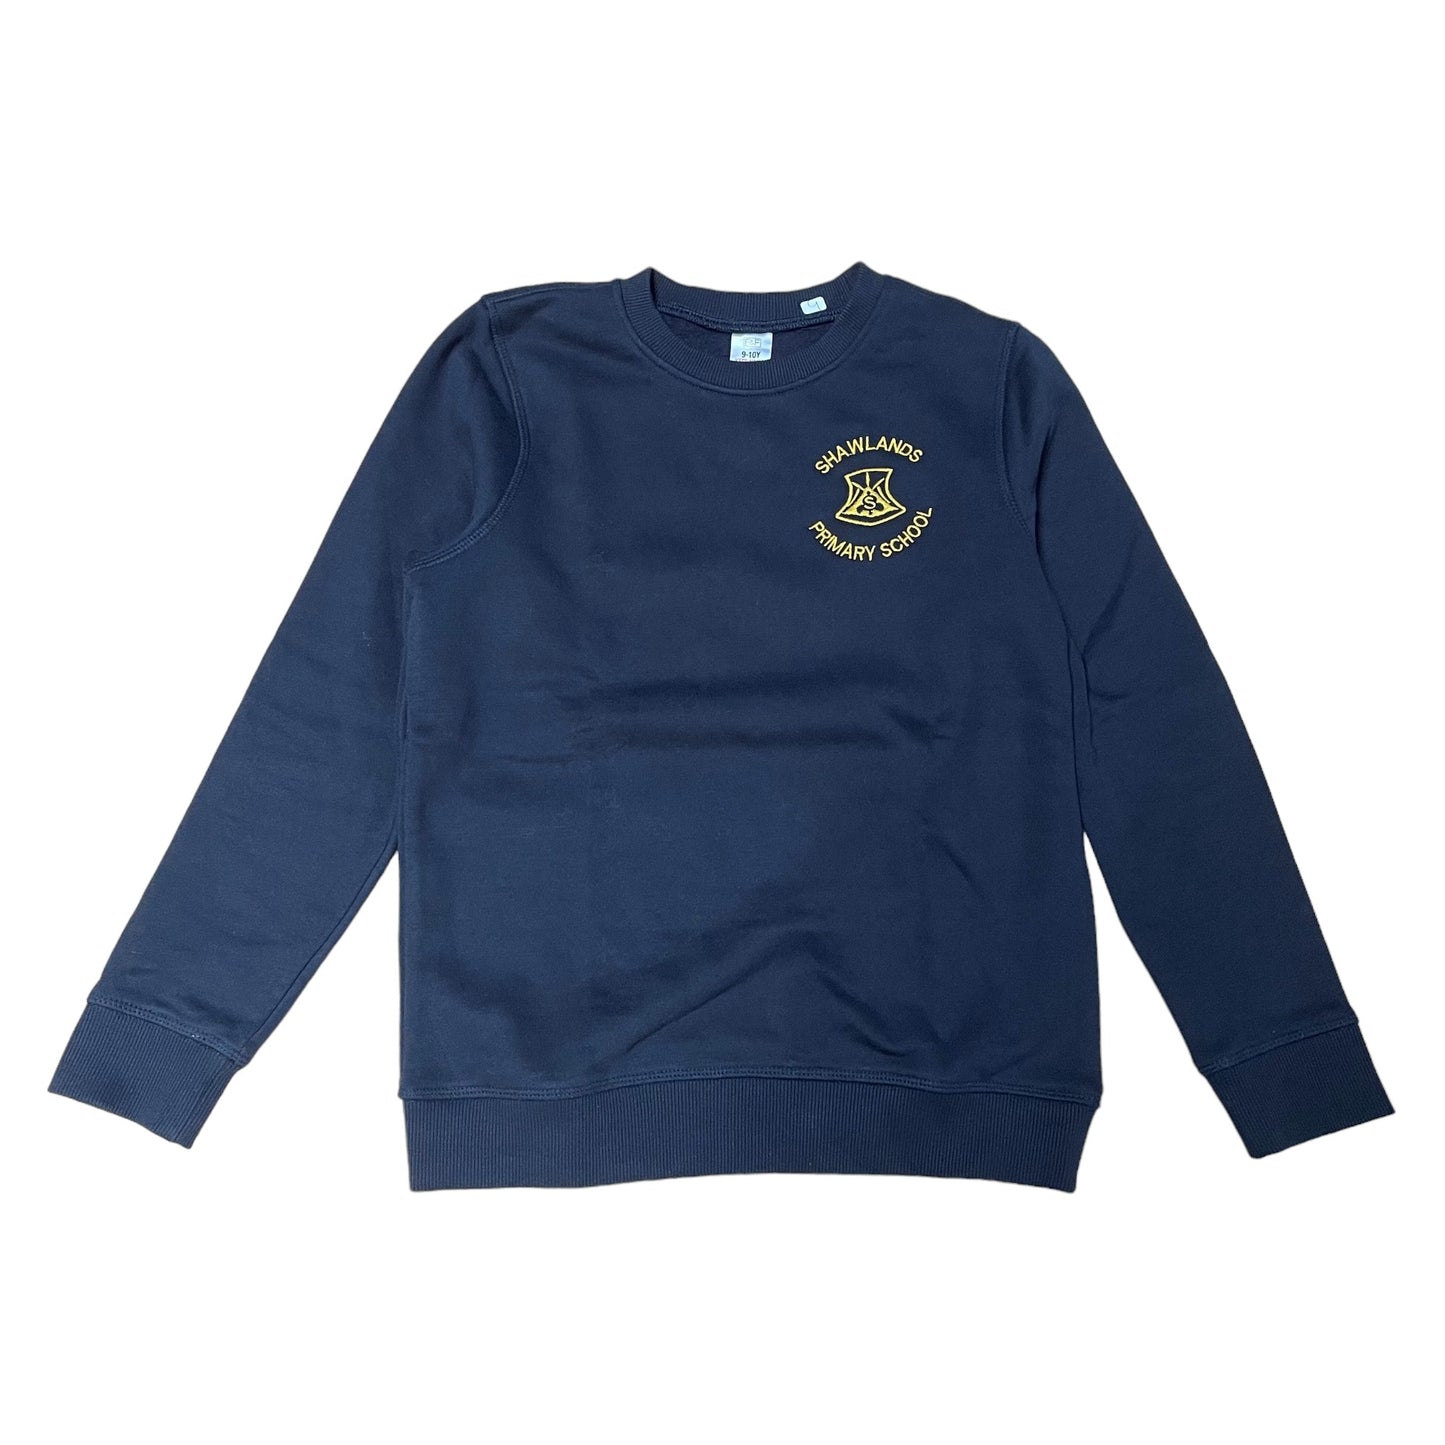 *Shawlands Primary Navy Blue Crew Neck Sweater